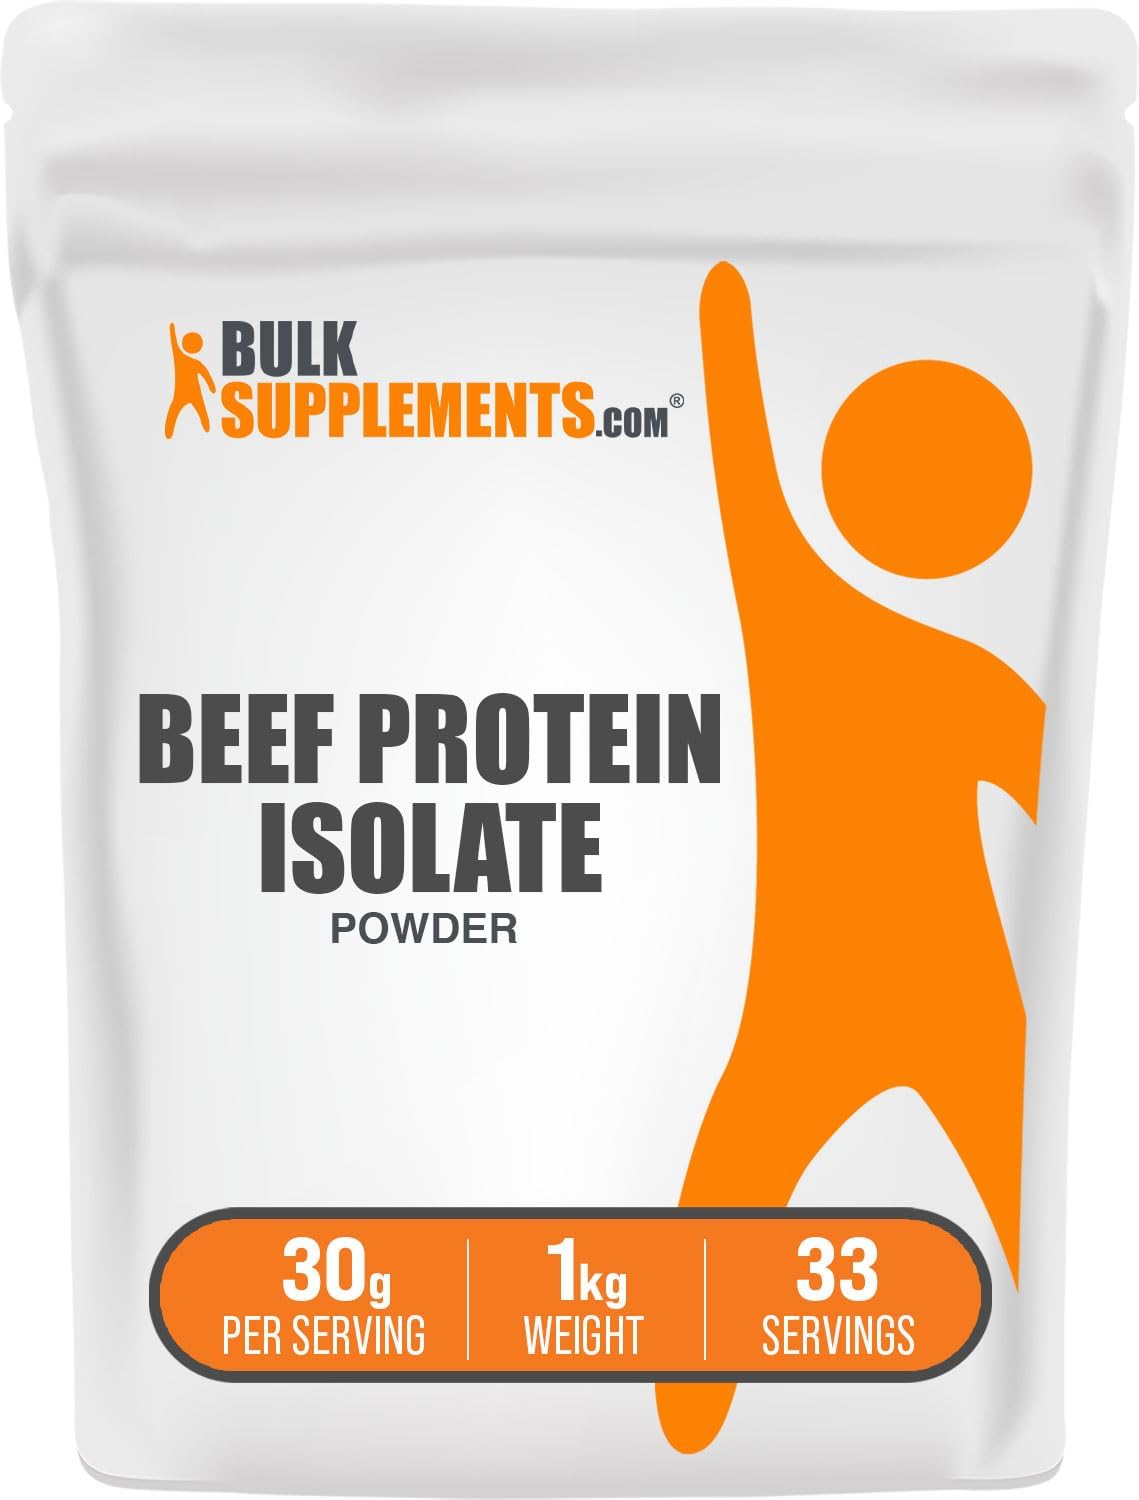 BULKSUPPLEMENTS.COM Beef Protein Isolate Powder - No Sugar Added, Glut